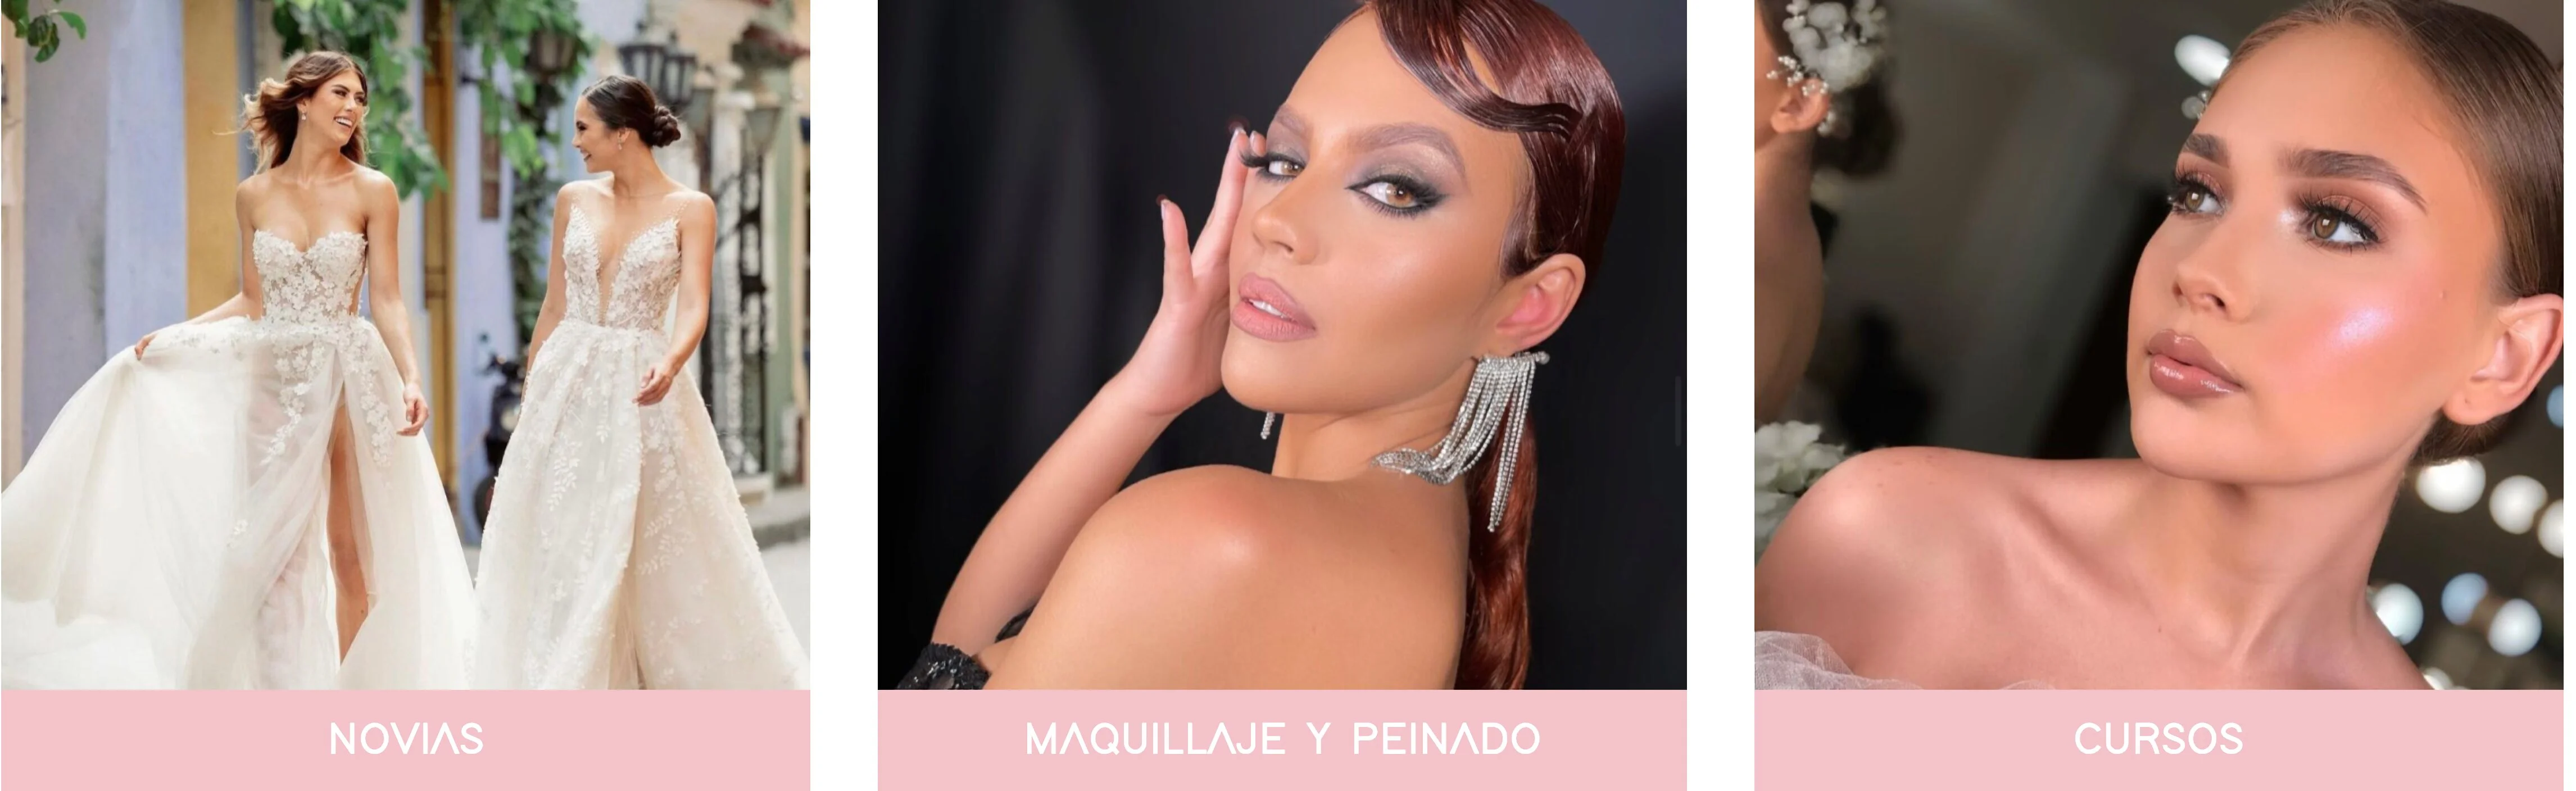 Maquillaje-andrea-rodriguez-beauty-12553